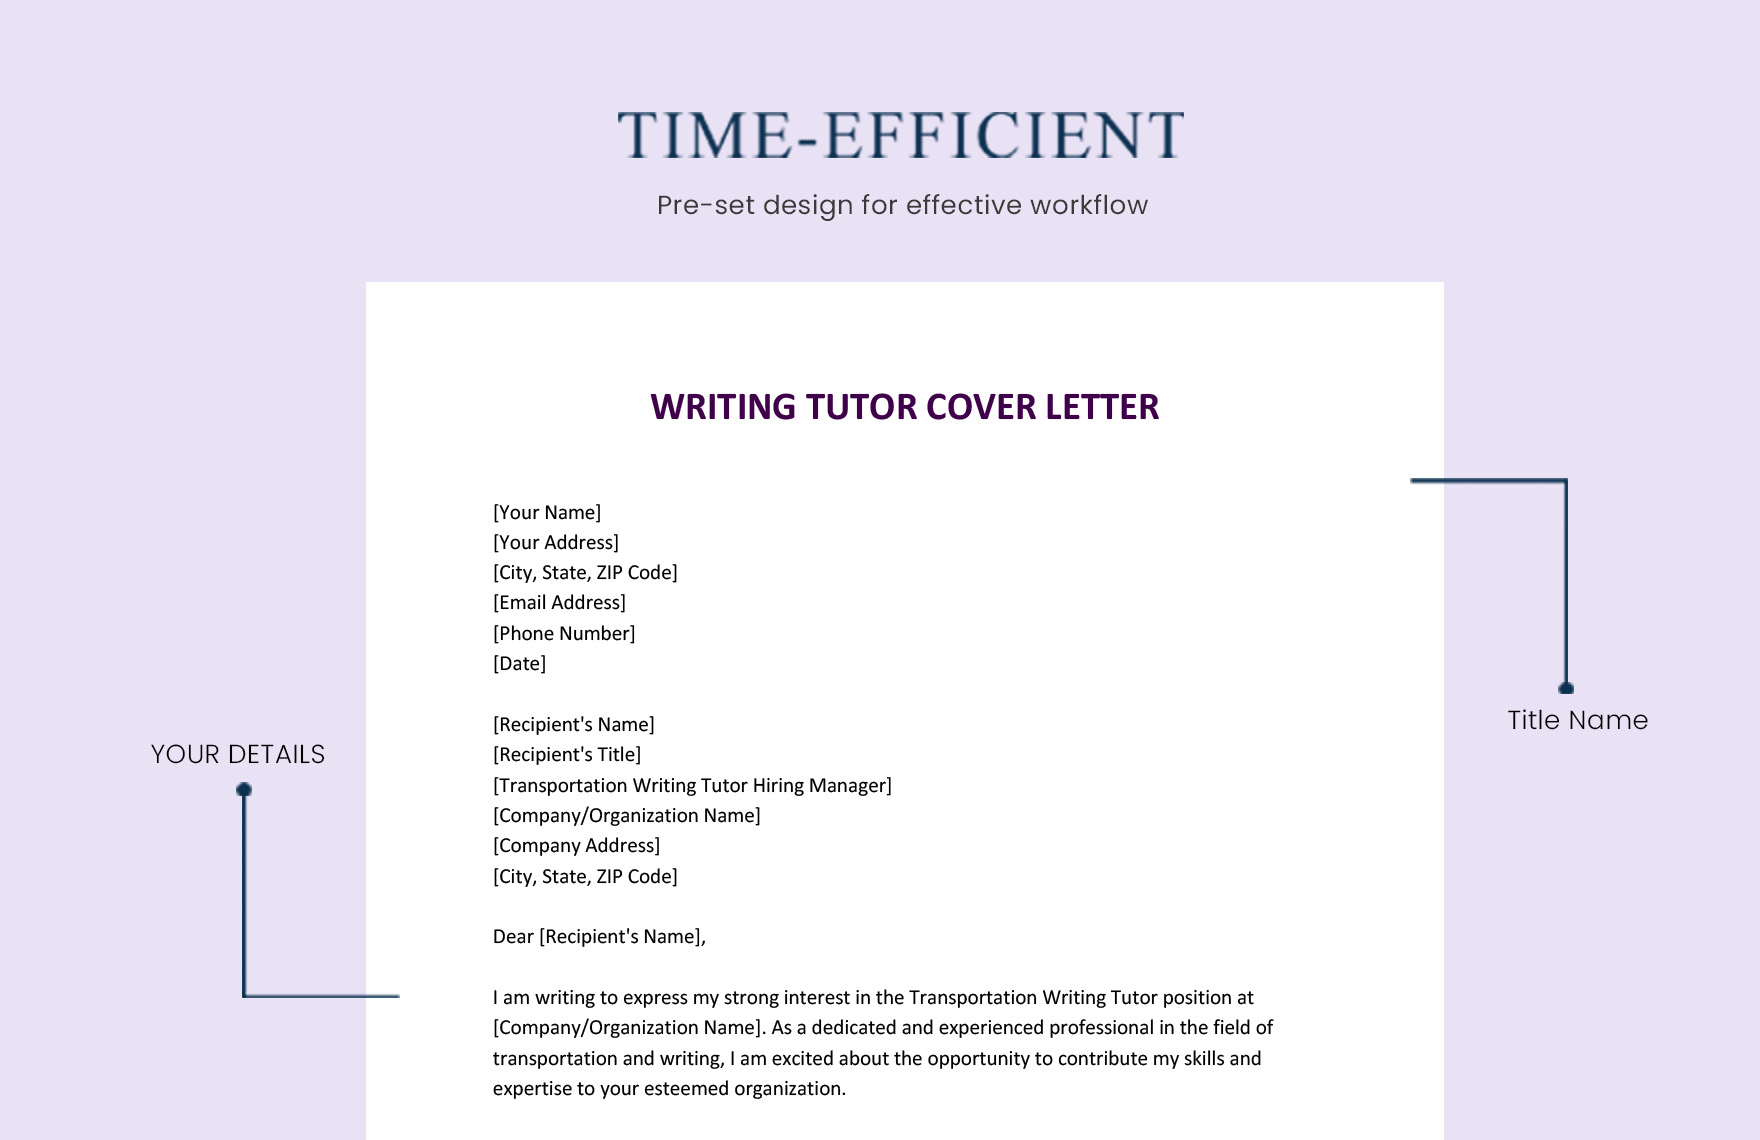 Writing Tutor Cover Letter